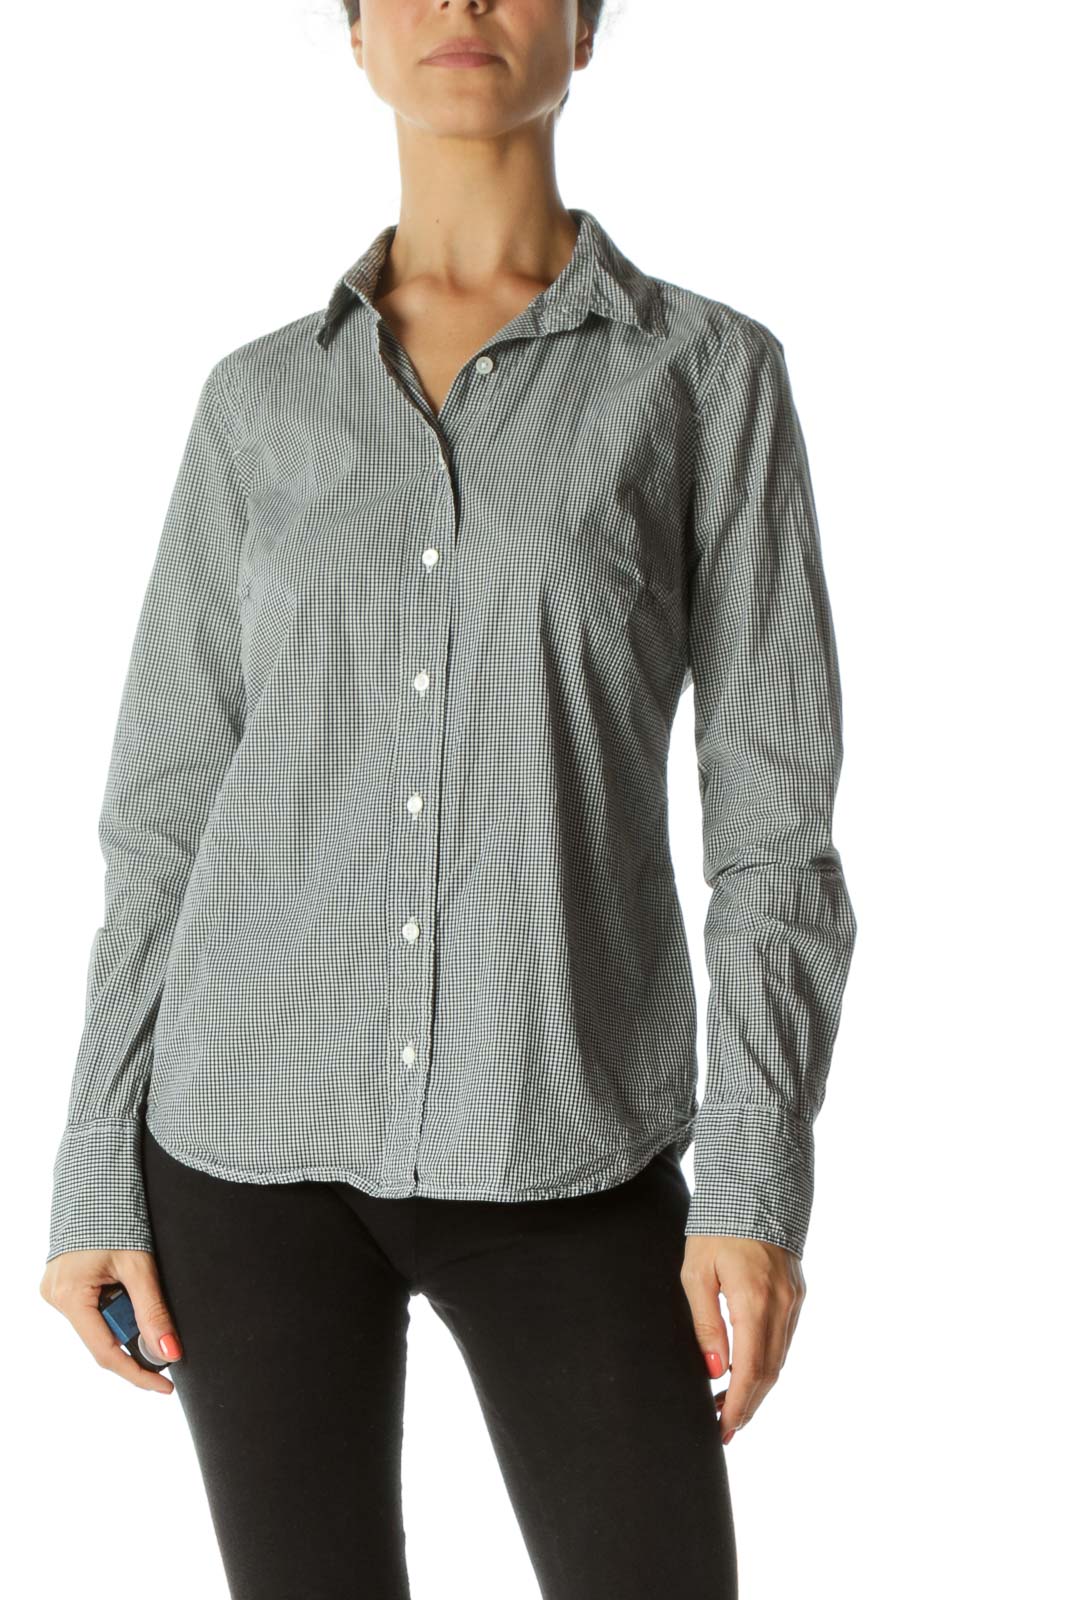 Black White Checkered 100% Cotton Shirt Front